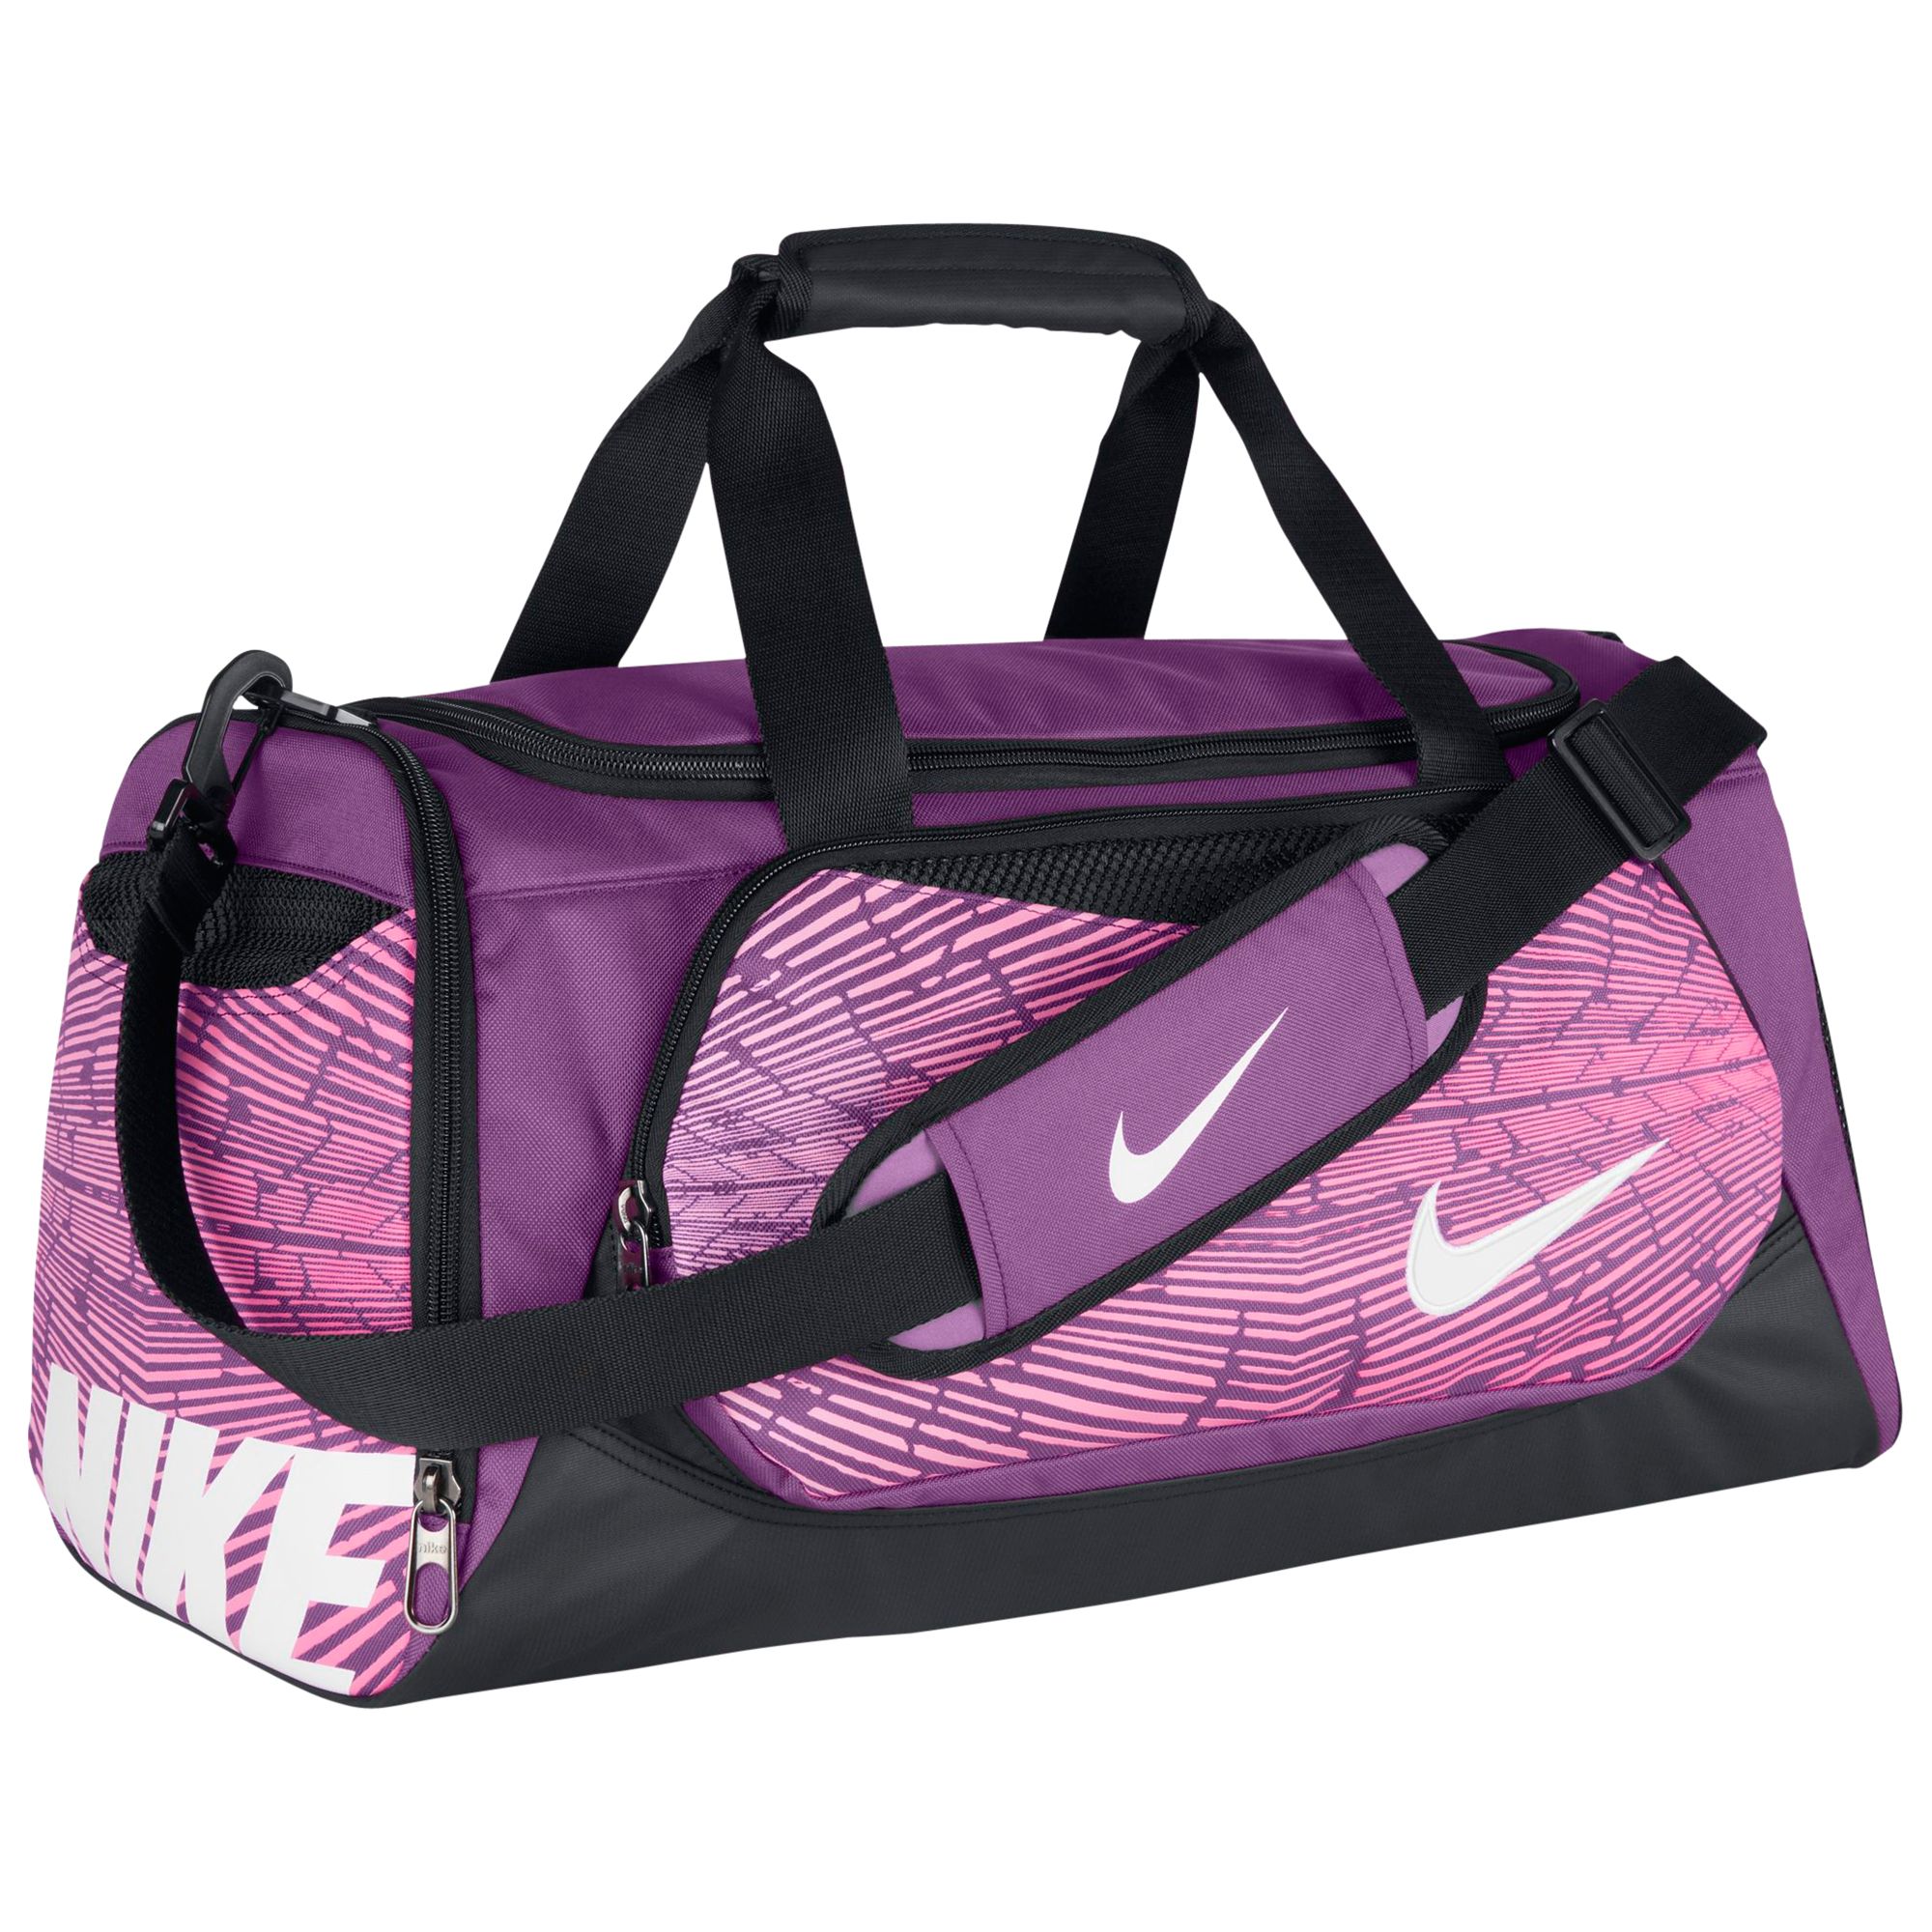 Blue Handbags: Purple Nike Bags